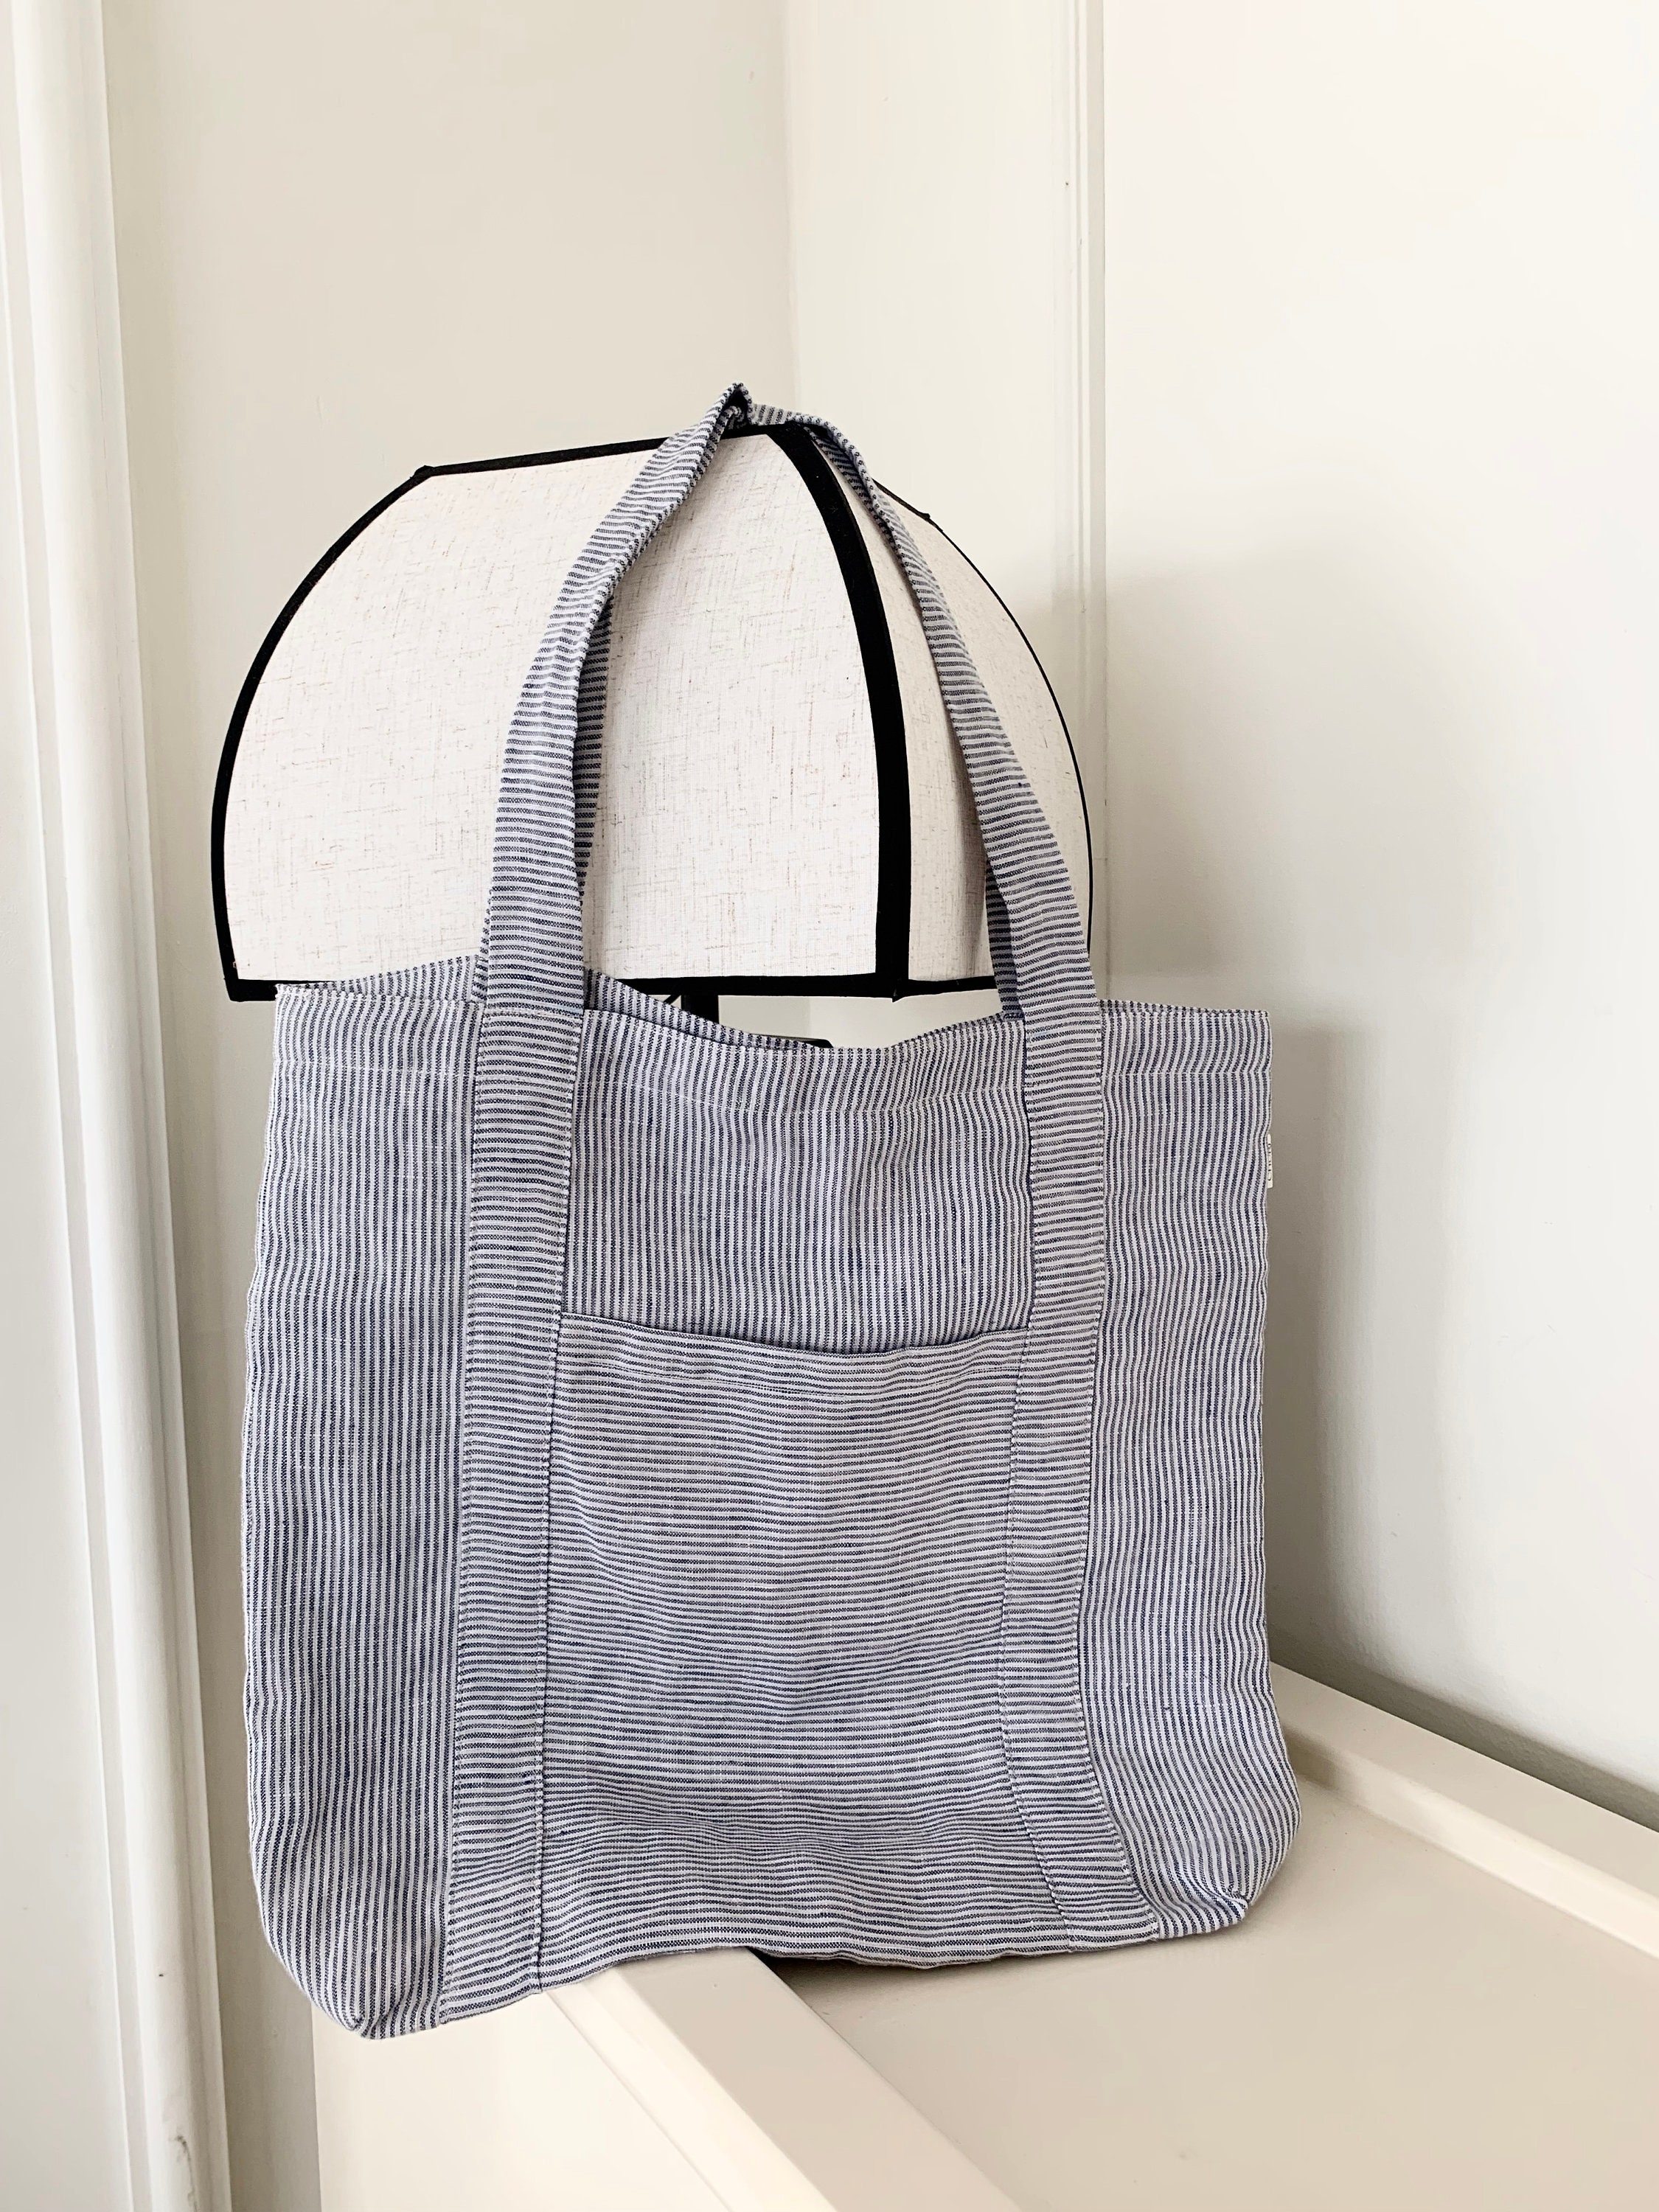 Double Layer Linen Tote Bag, Black Stripe Linen Tote Bag - Etsy